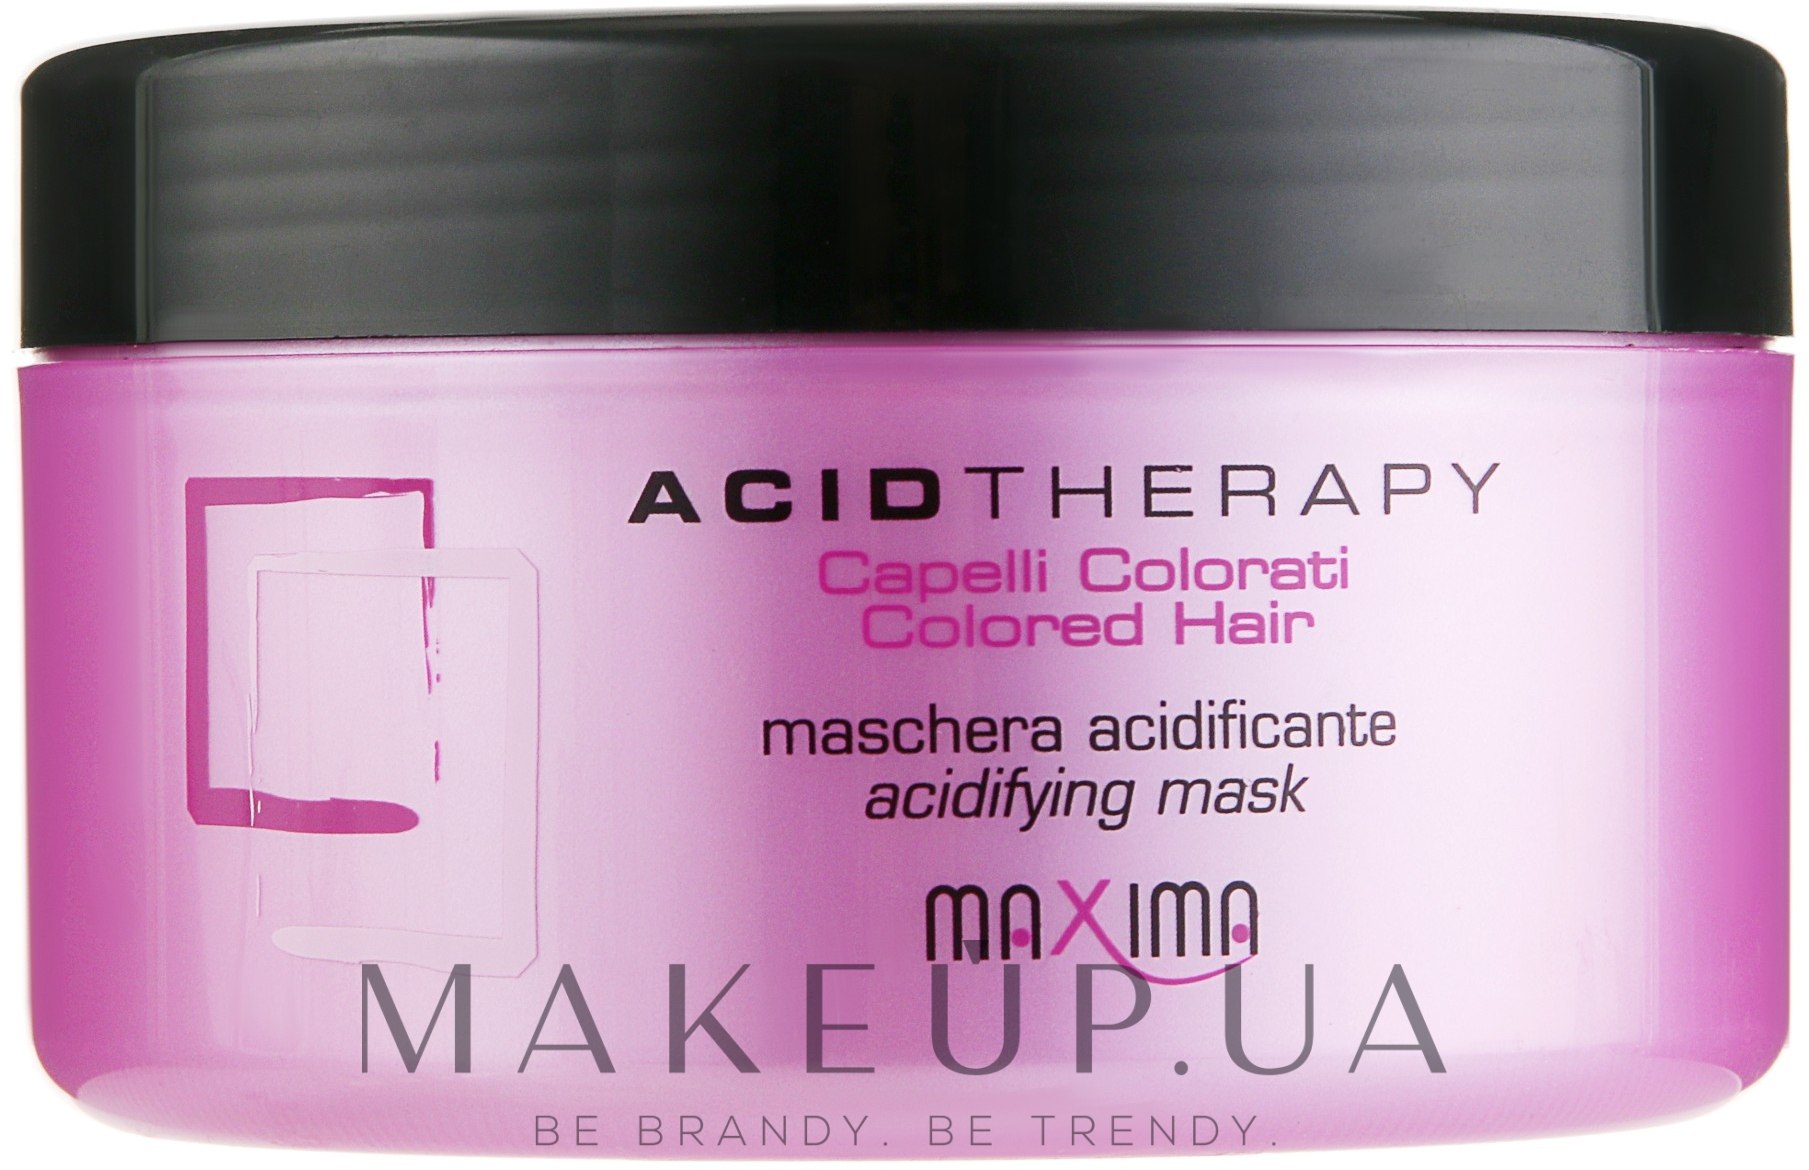 Lifetherapy maxima маска для волос